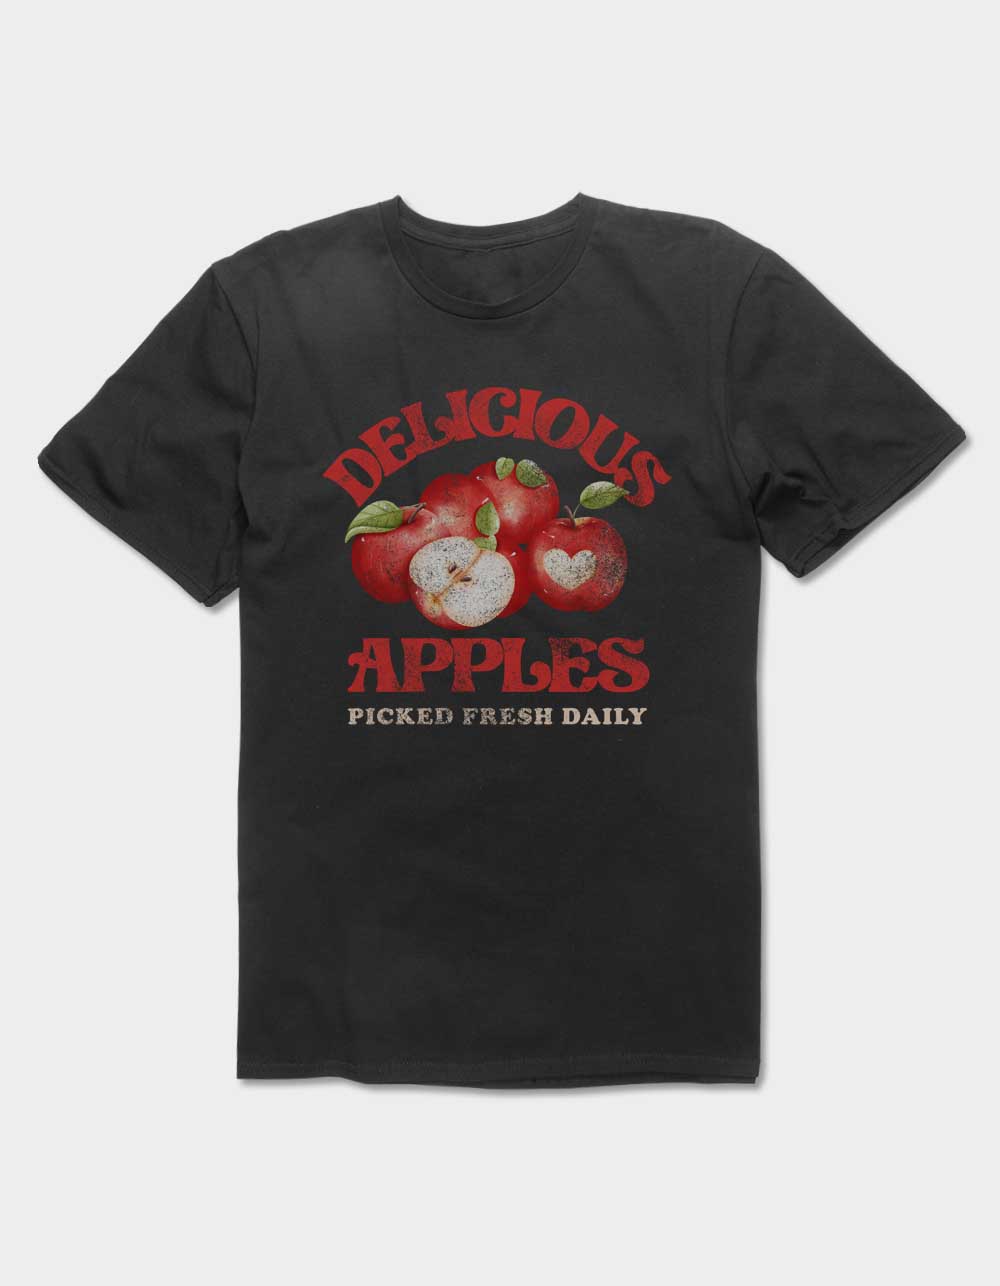 APPLES Delicious Apples Distressed Unisex Tee